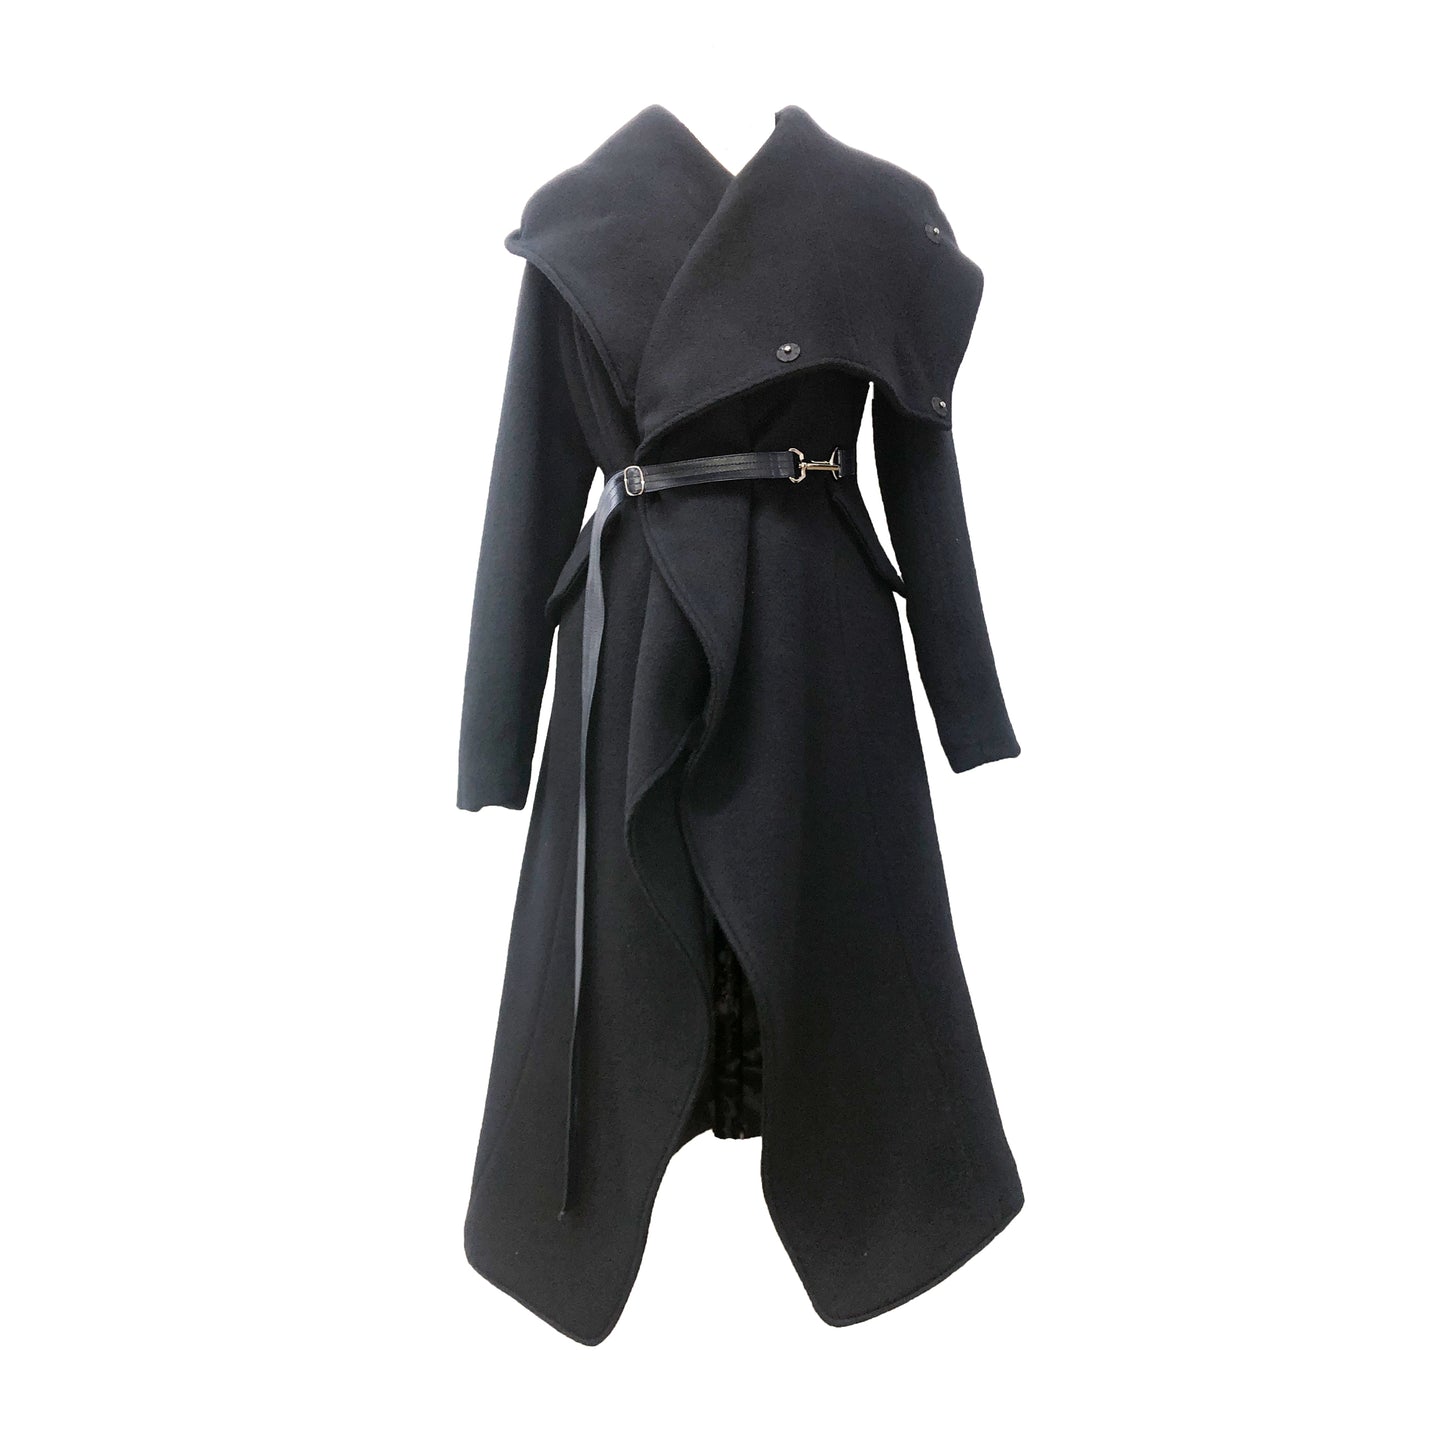 Medium length Black Coat with a hood and adjustable lambskin leather belt alongside metal clip closures 